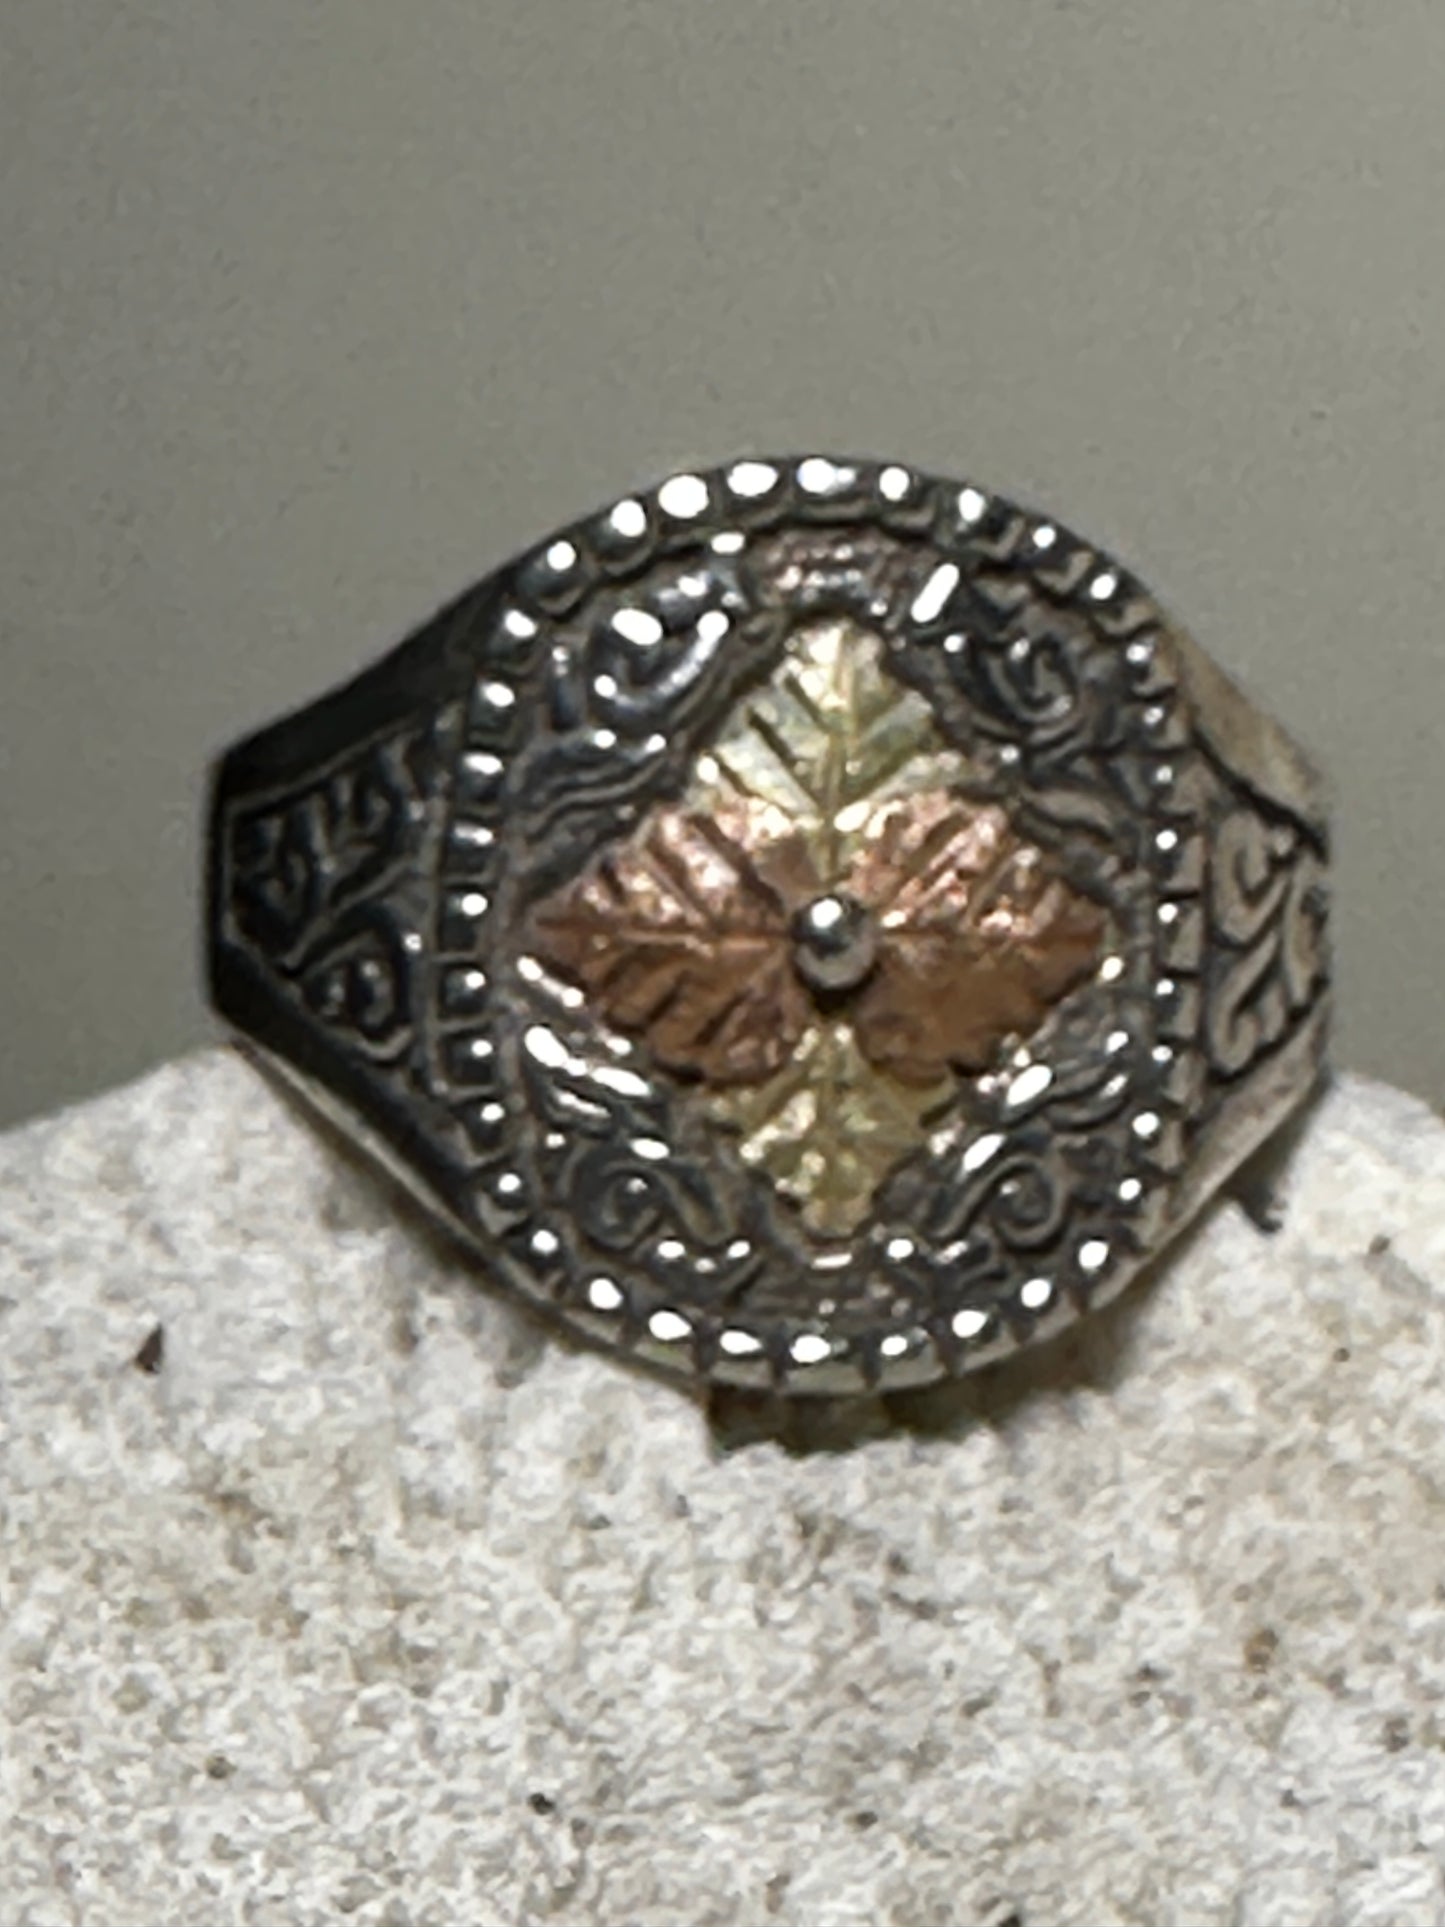 Black Hills Gold ring floral band size 10 sterling silver women men